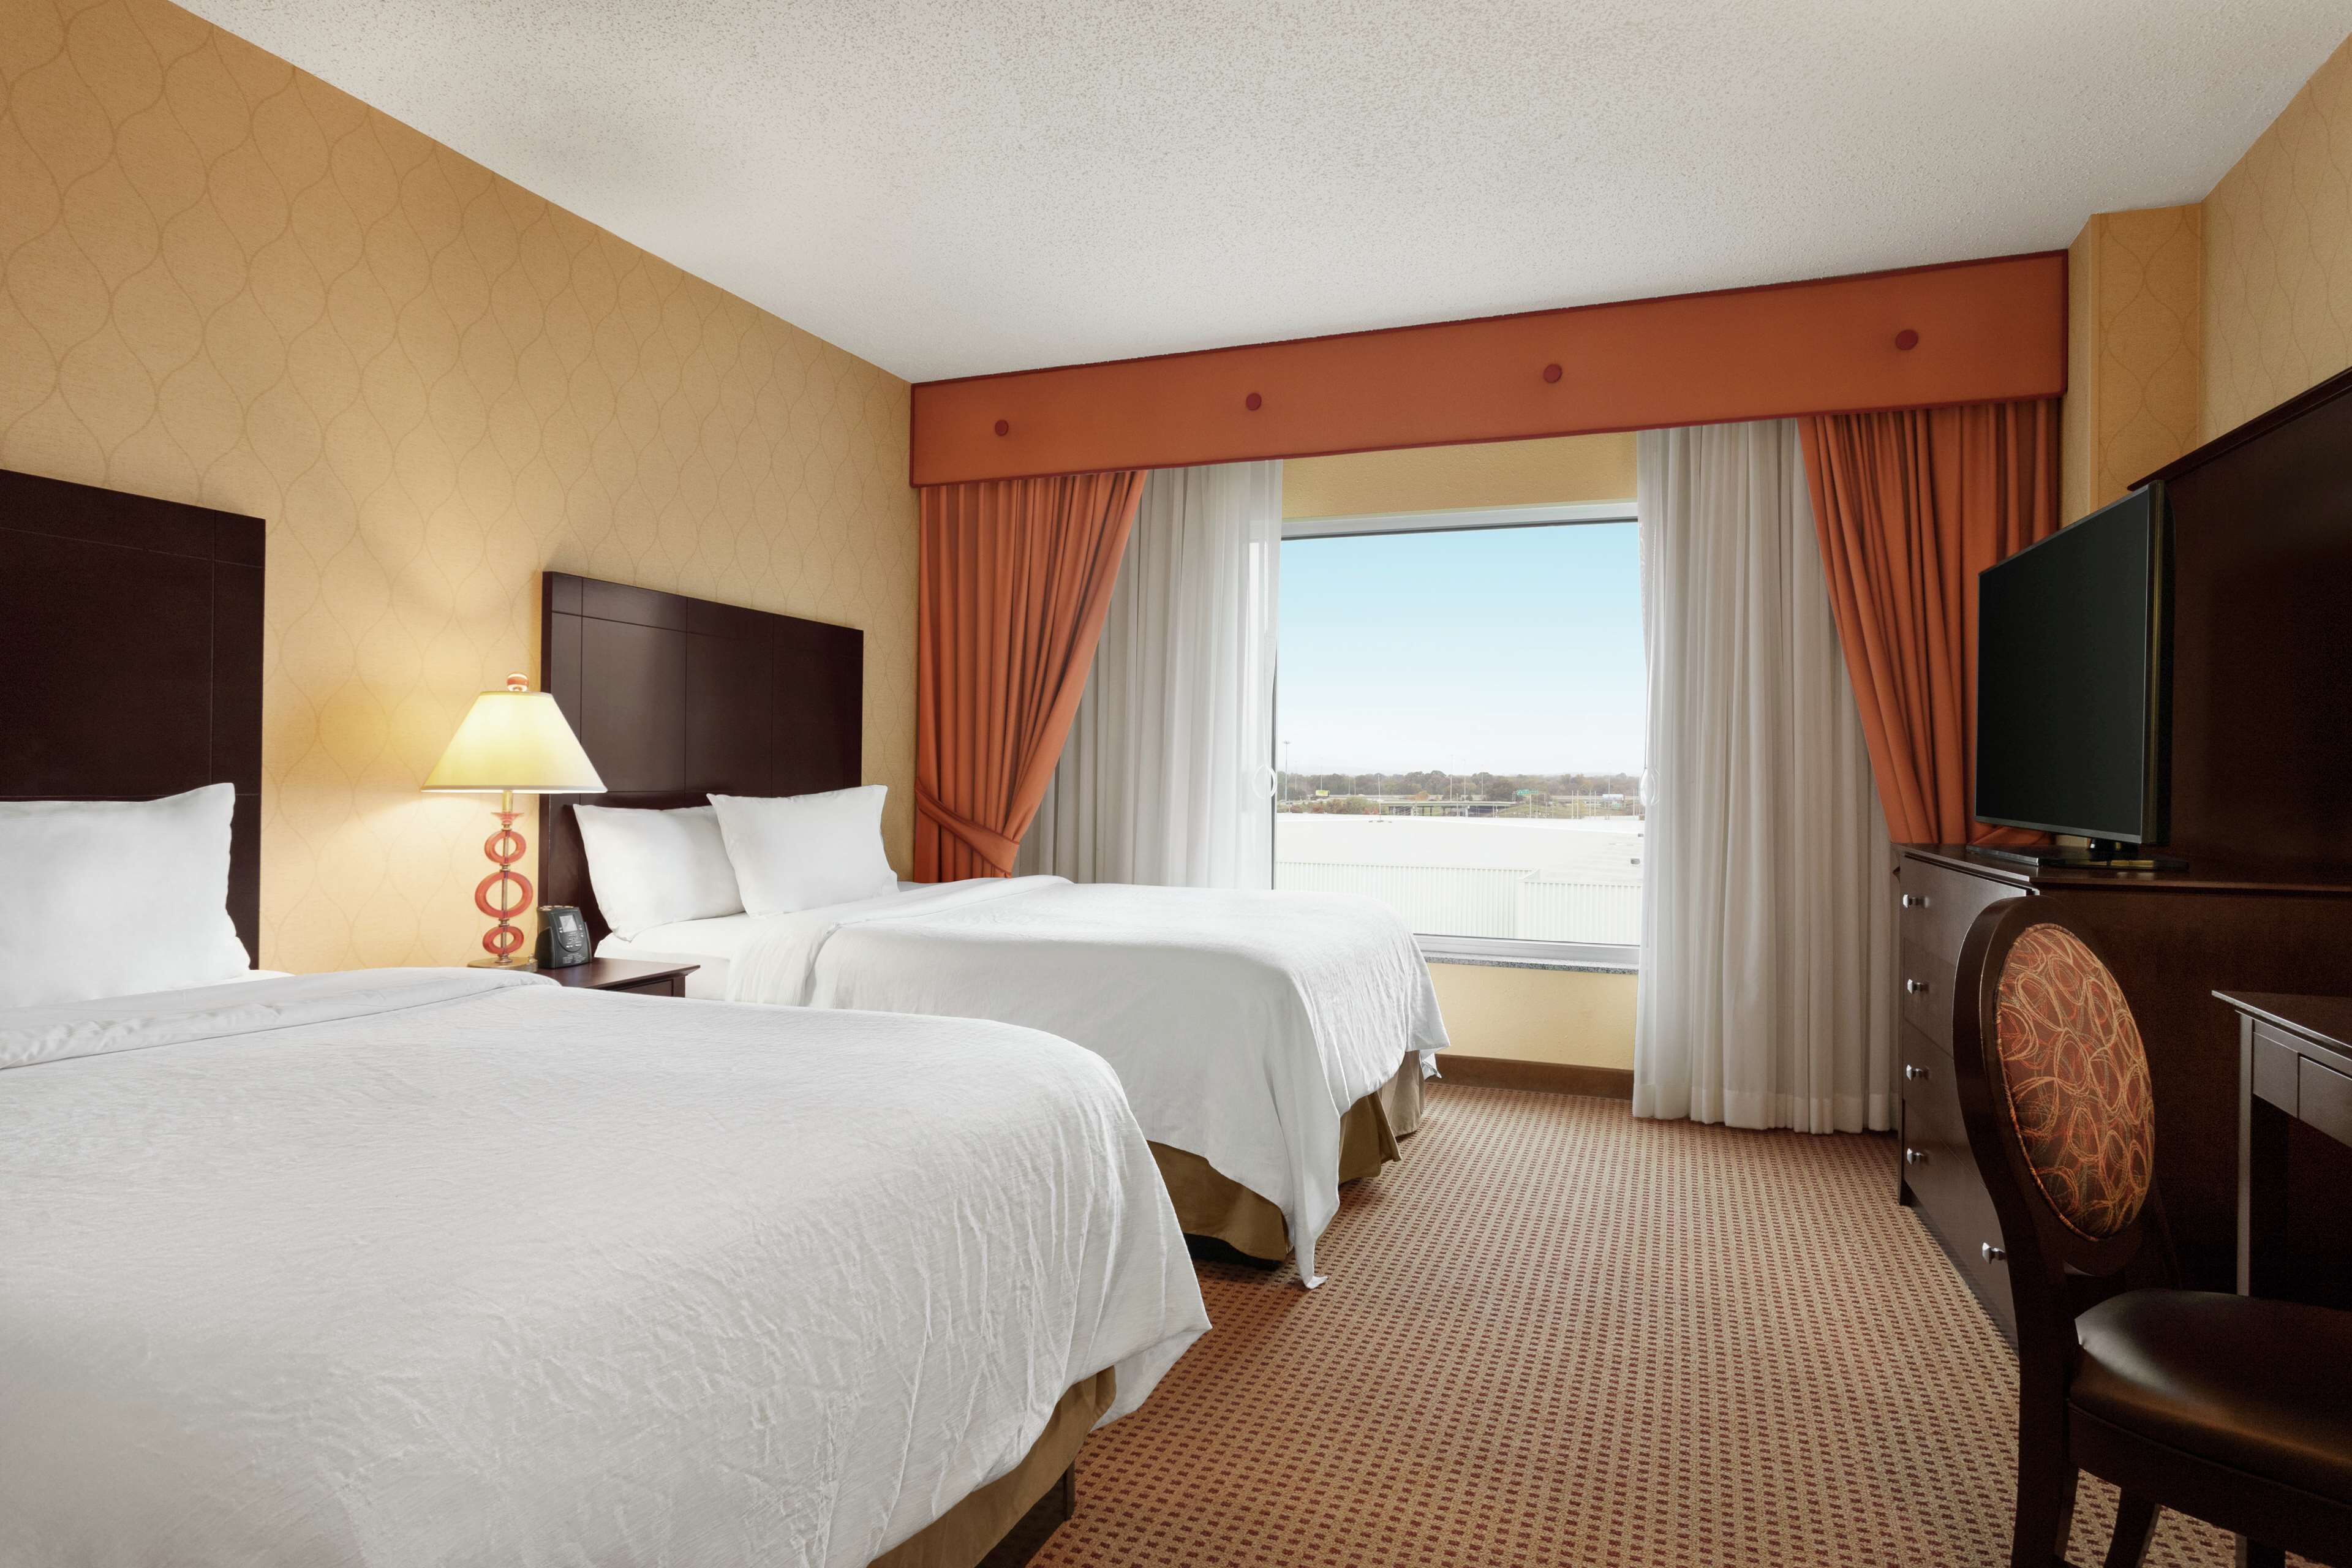 1 bedroom, hypo-allergenic bedding, in-room safe, desk, Embassy Suites by Hilton Huntsville